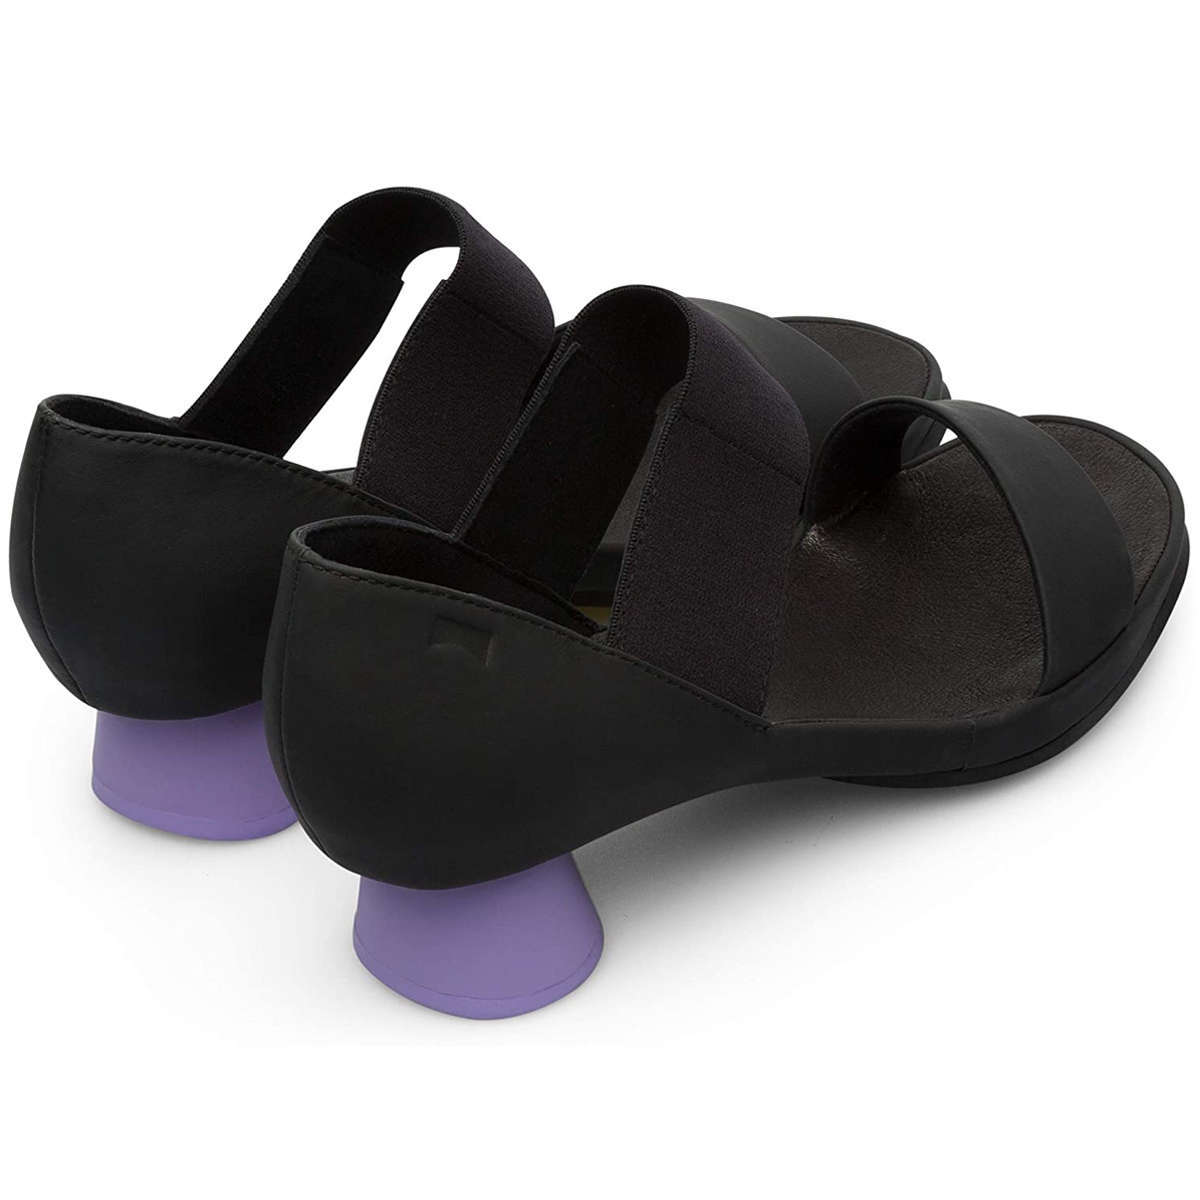 Camper Alright Full Grain Leather Women's Slip-On Sandals#color_black black